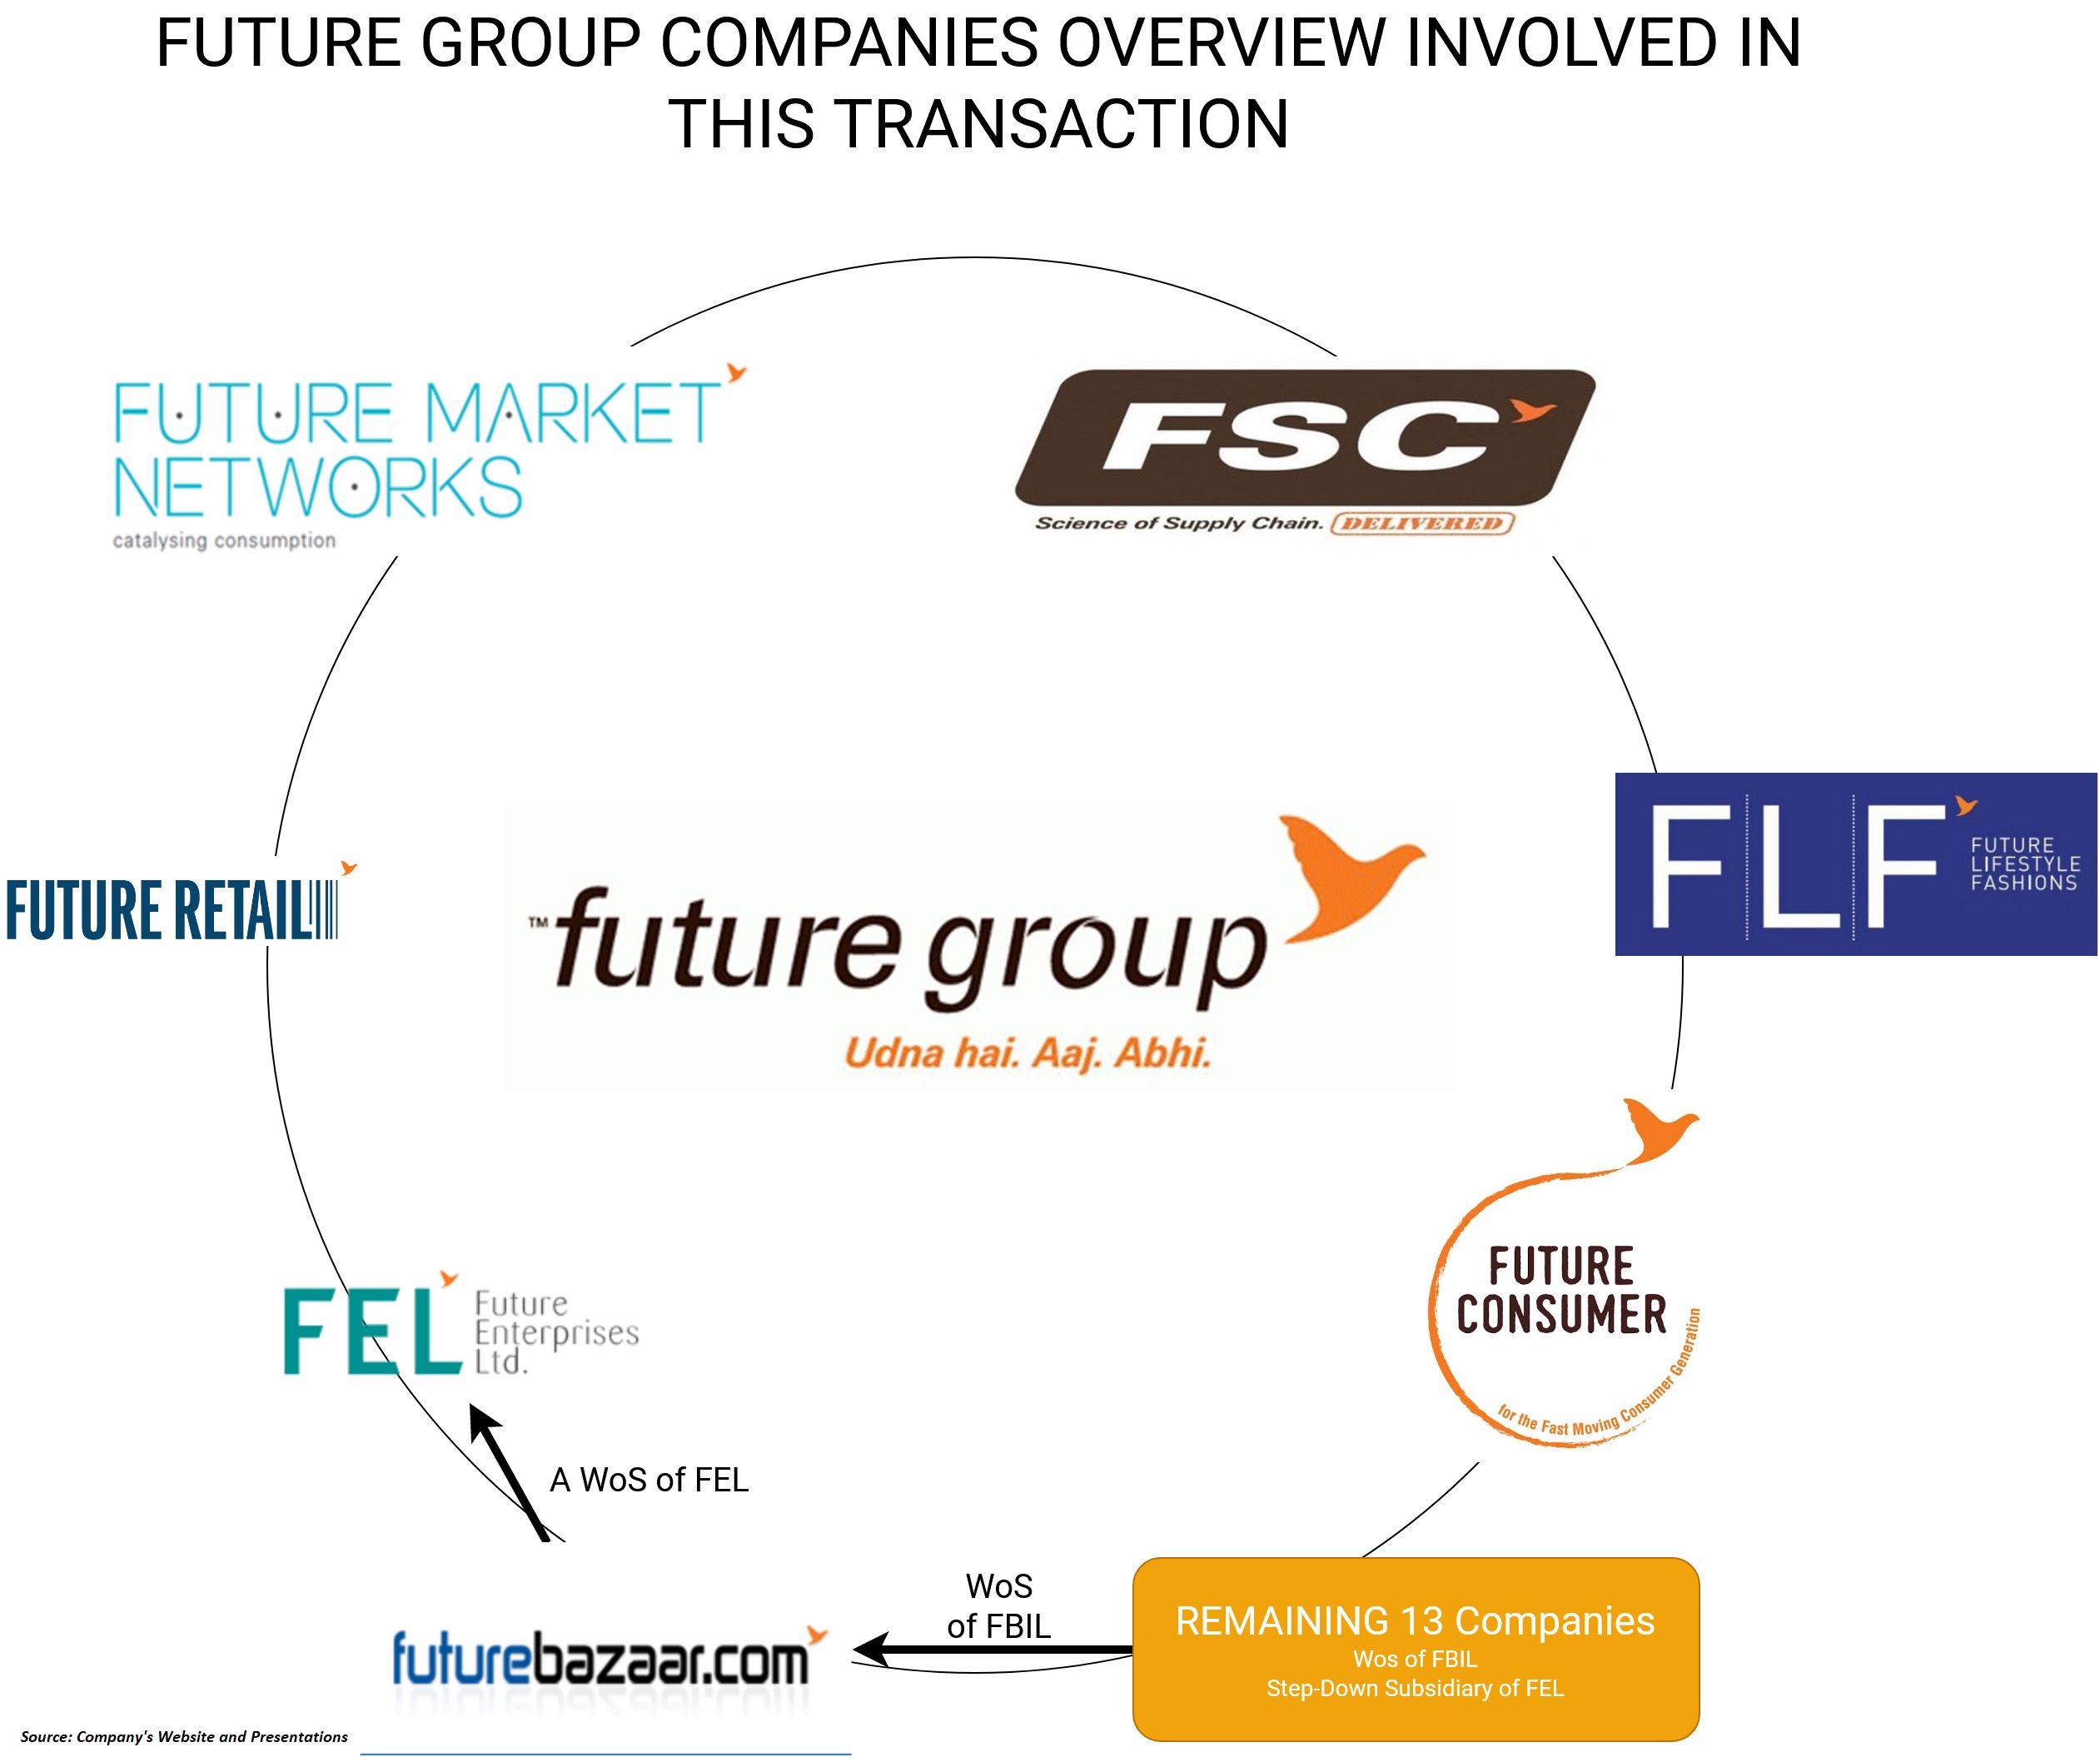 Reliance-Retail-Future-Group-Acquisition-1